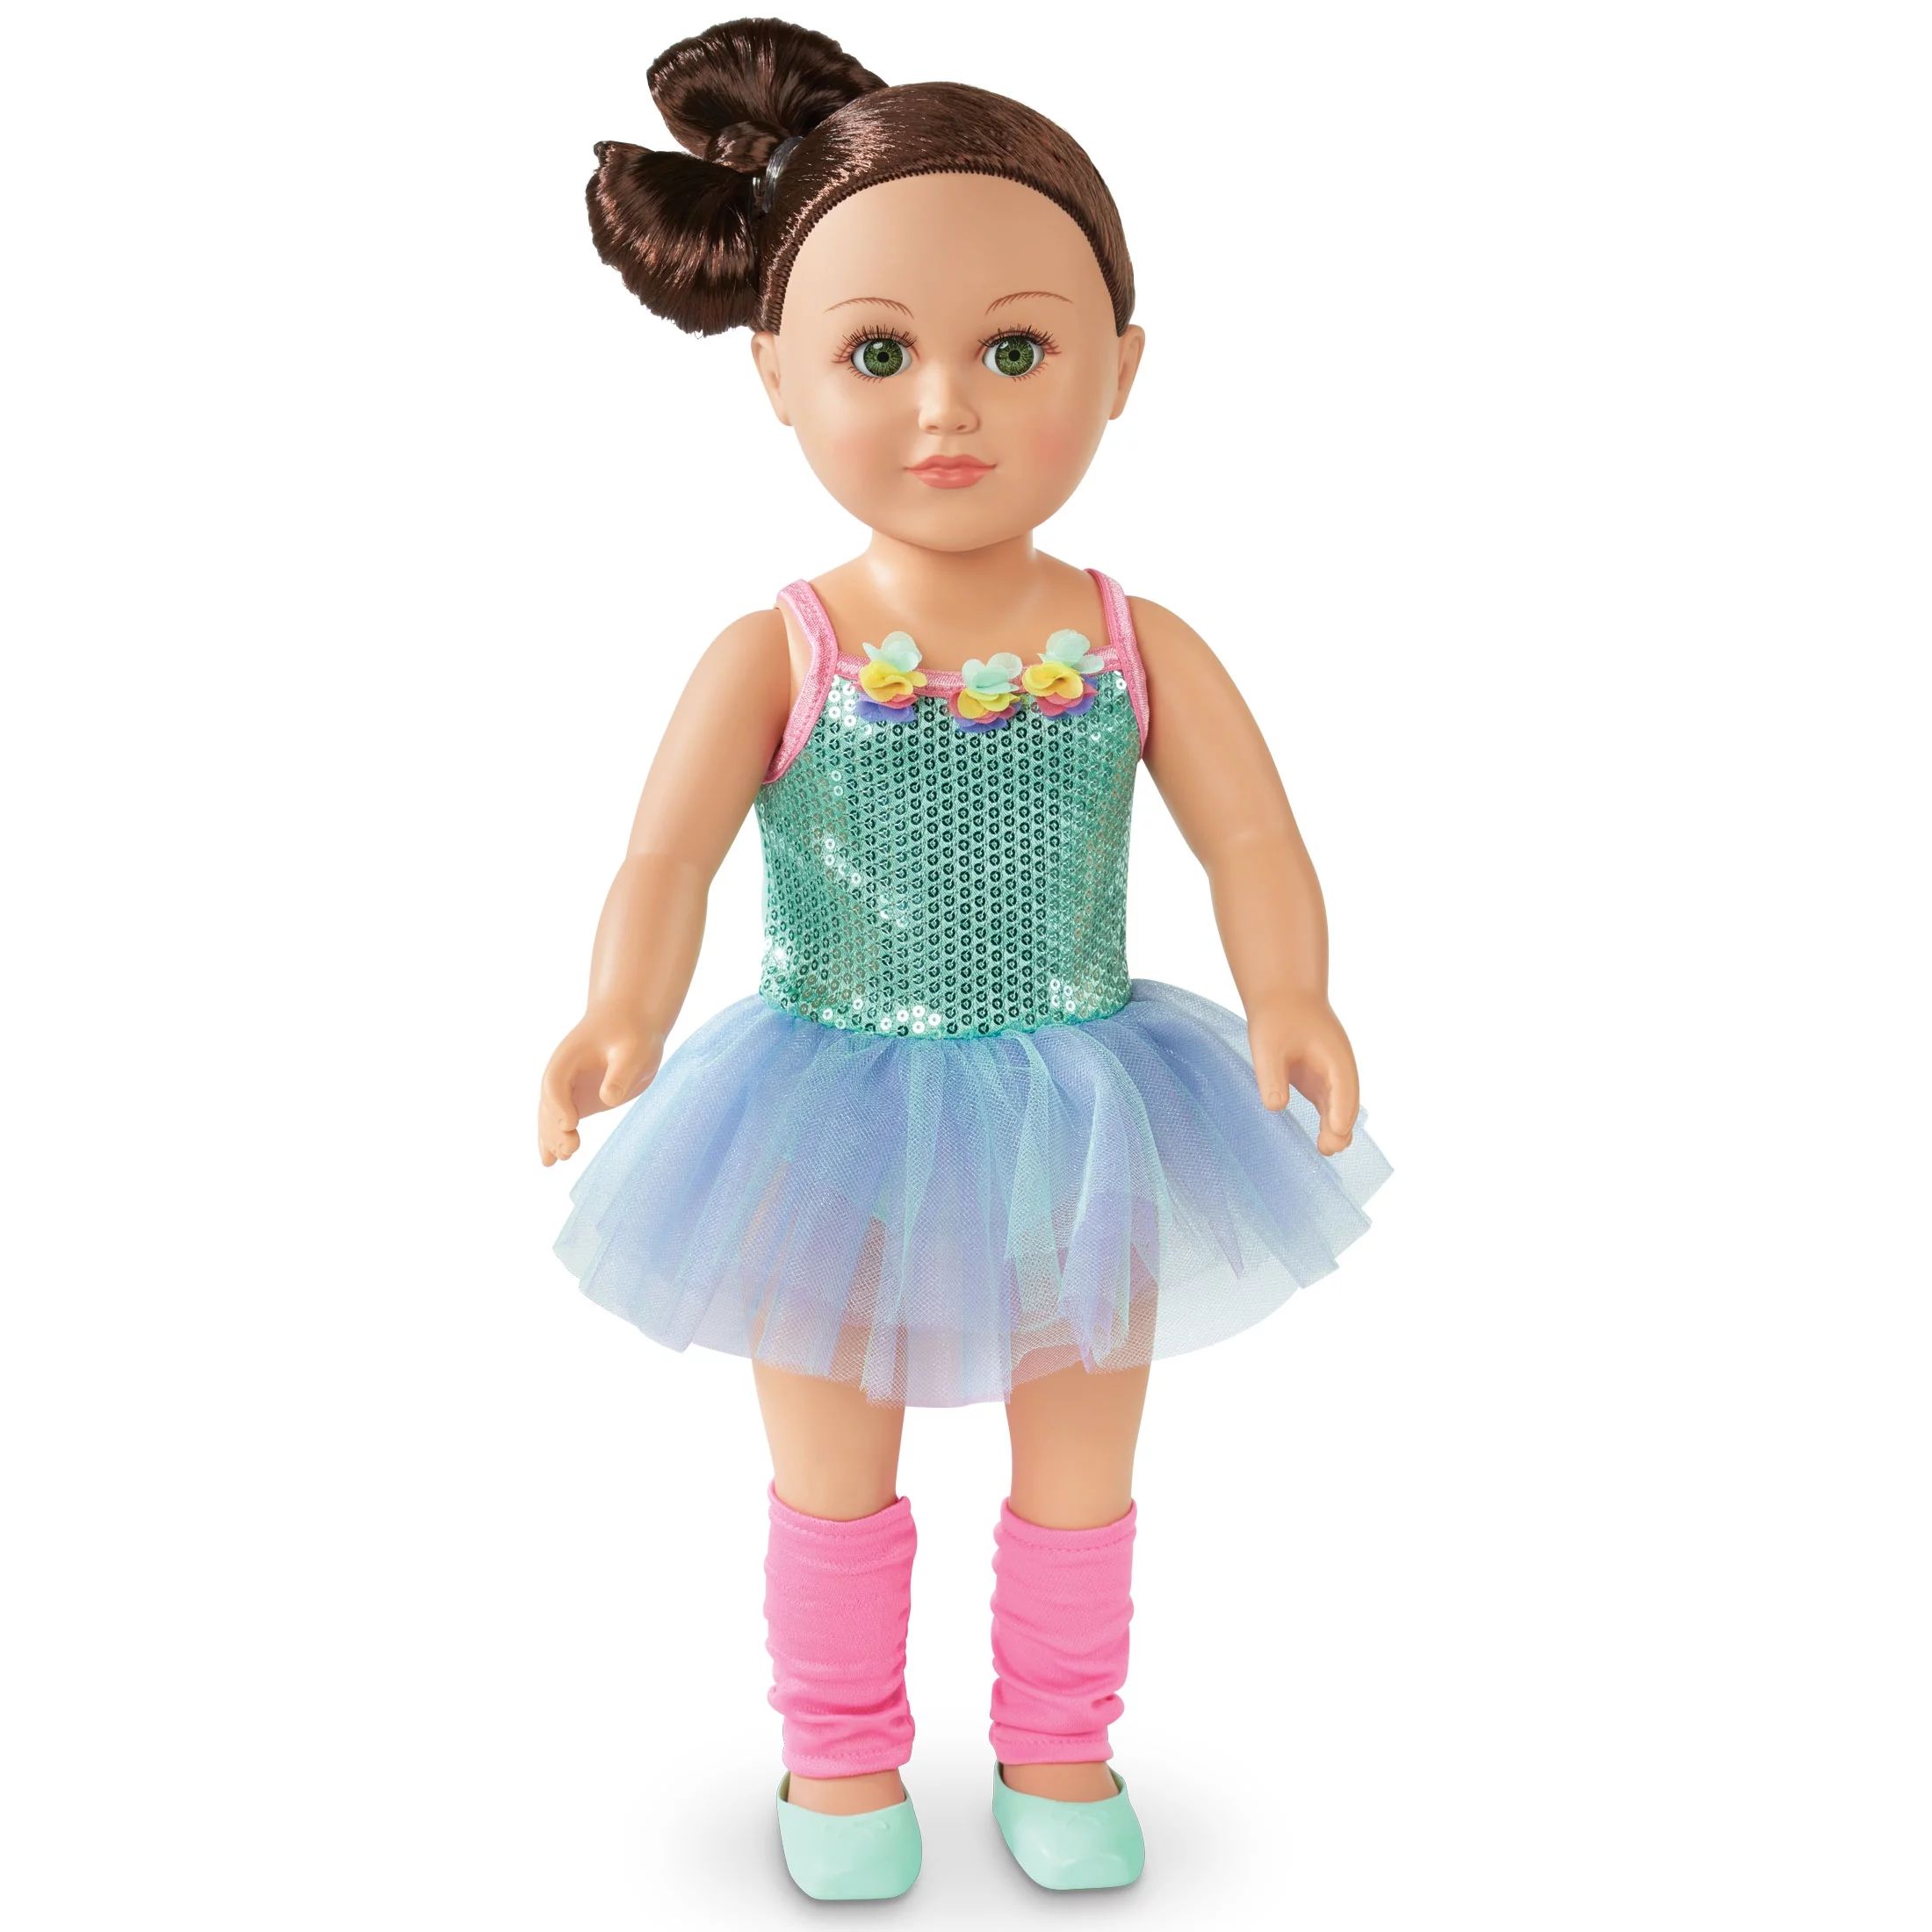 My Life As Gracelynn Posable 18 inch Doll, Brunette Hair, Green Eyes | Walmart (US)